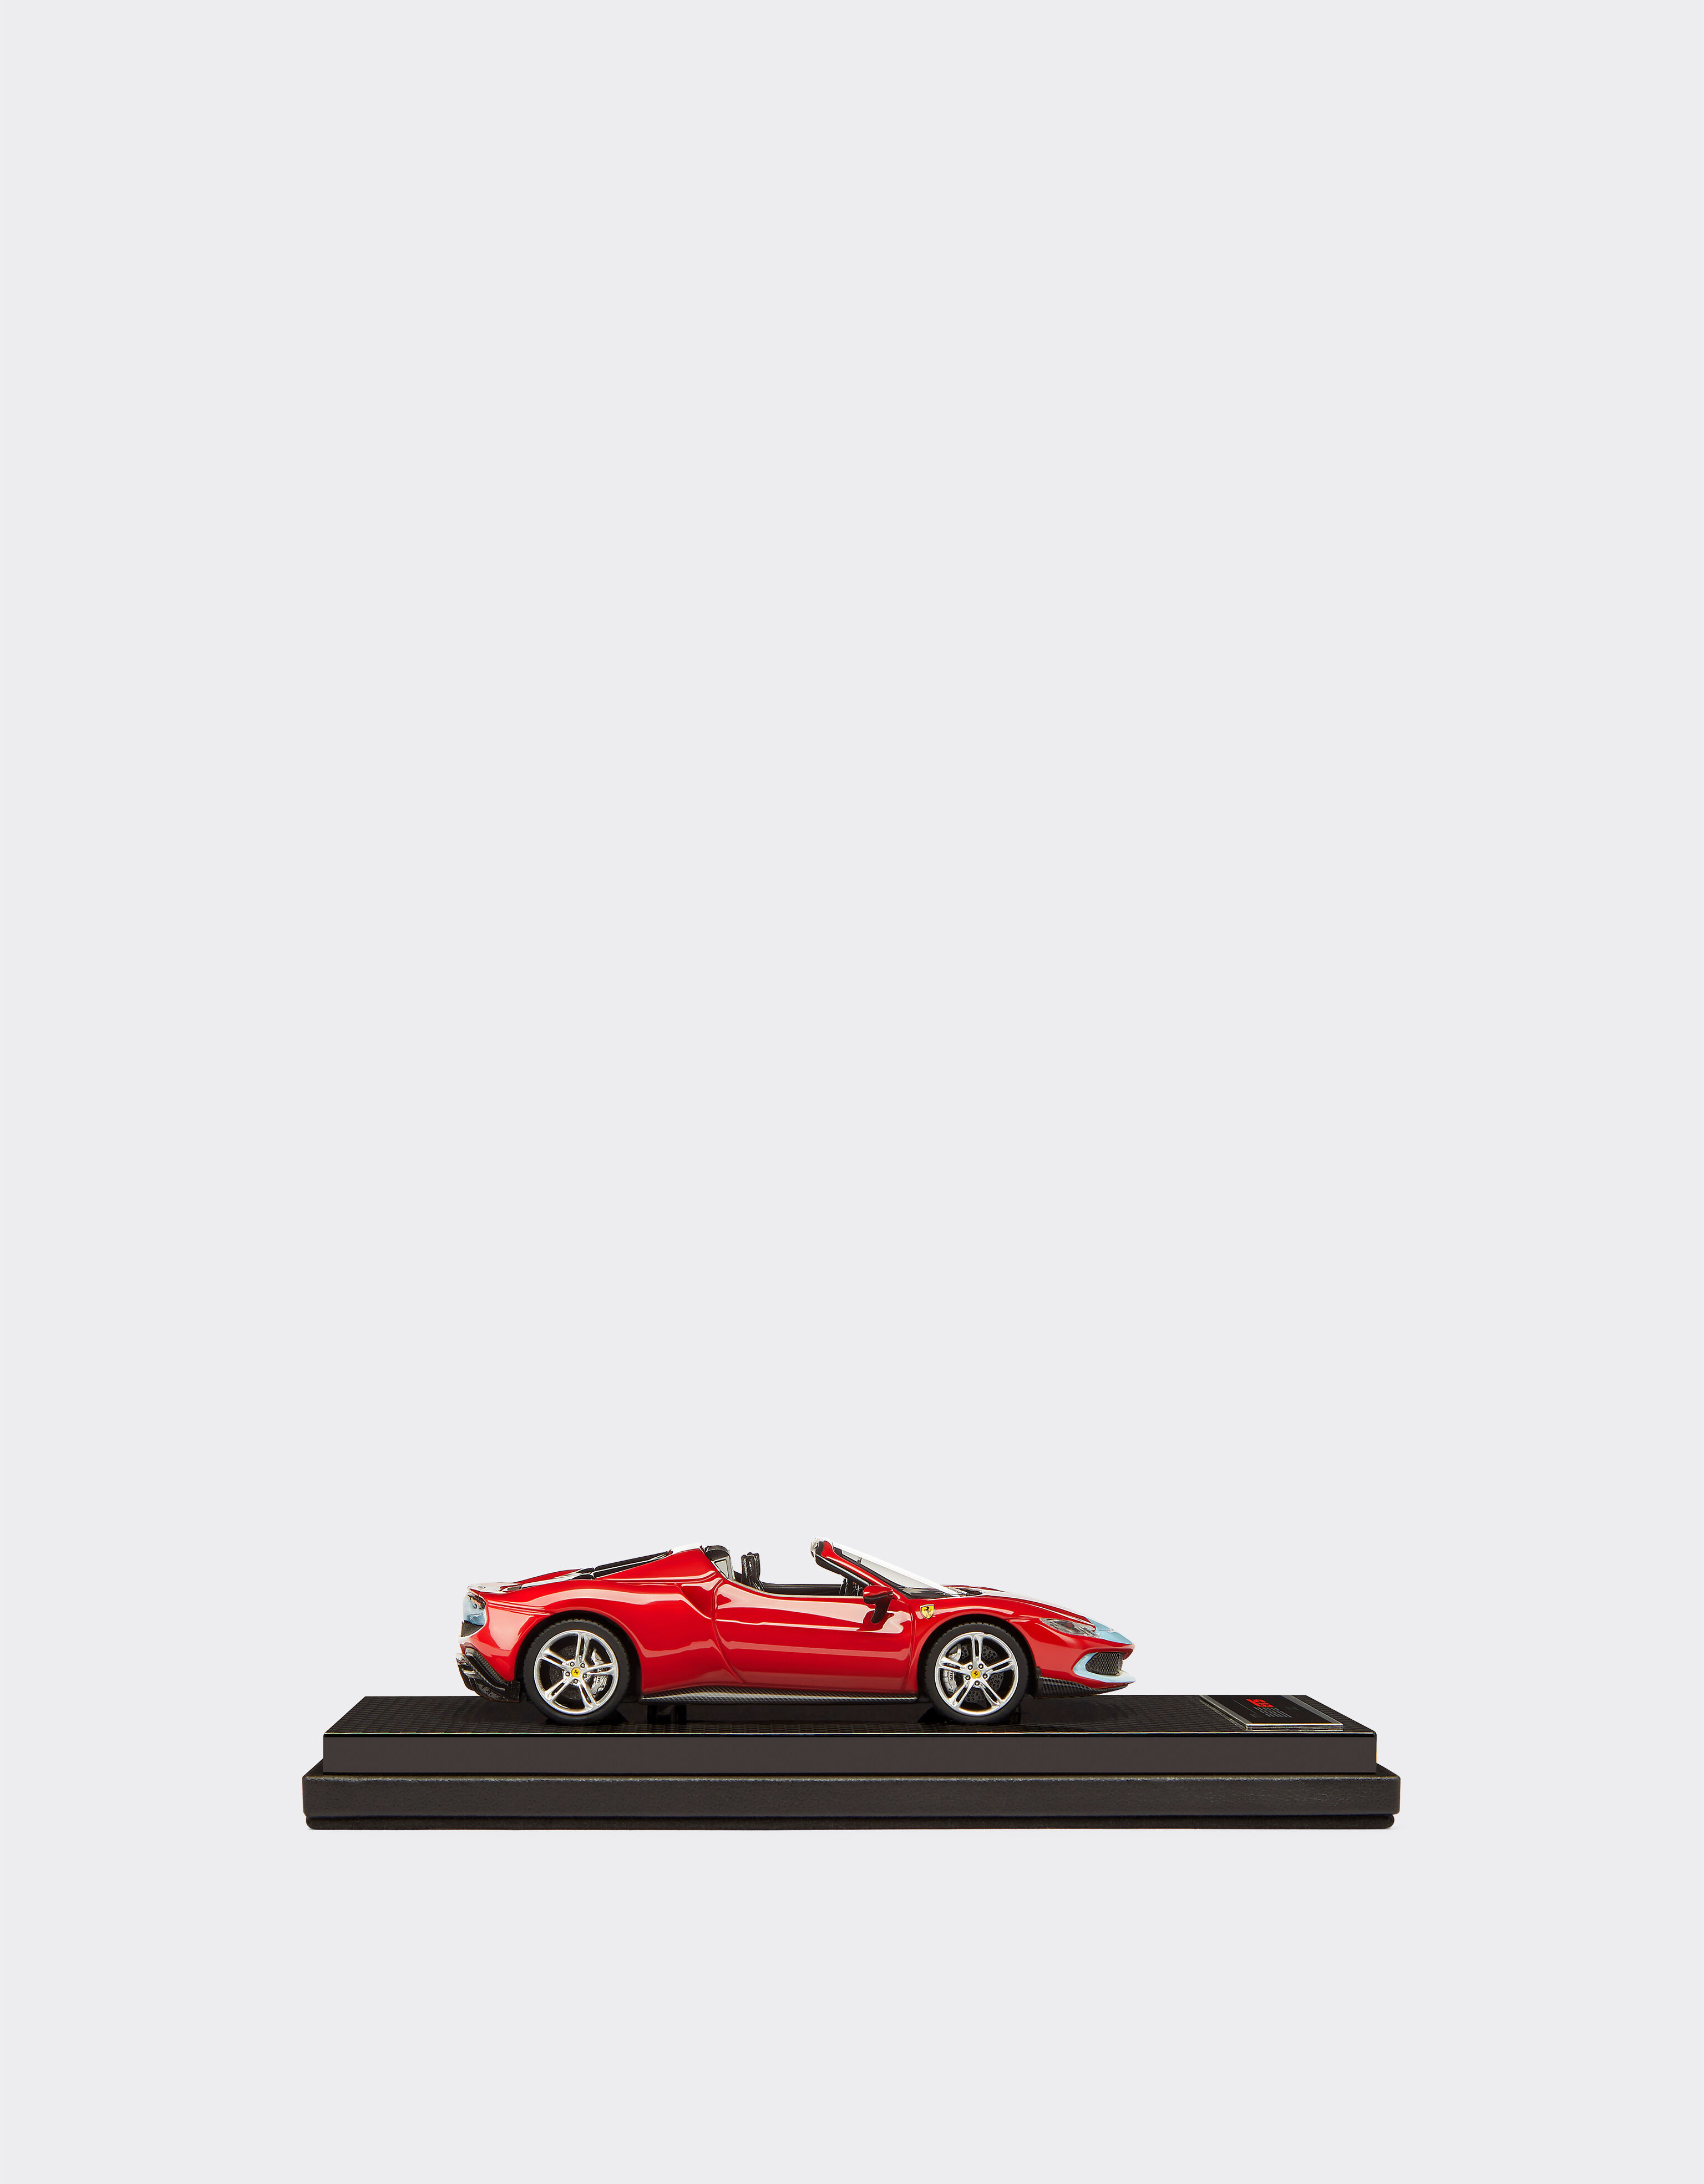 Ferrari 法拉利296 GTS 1:43比例模型 Rosso Corsa 红色 20168f